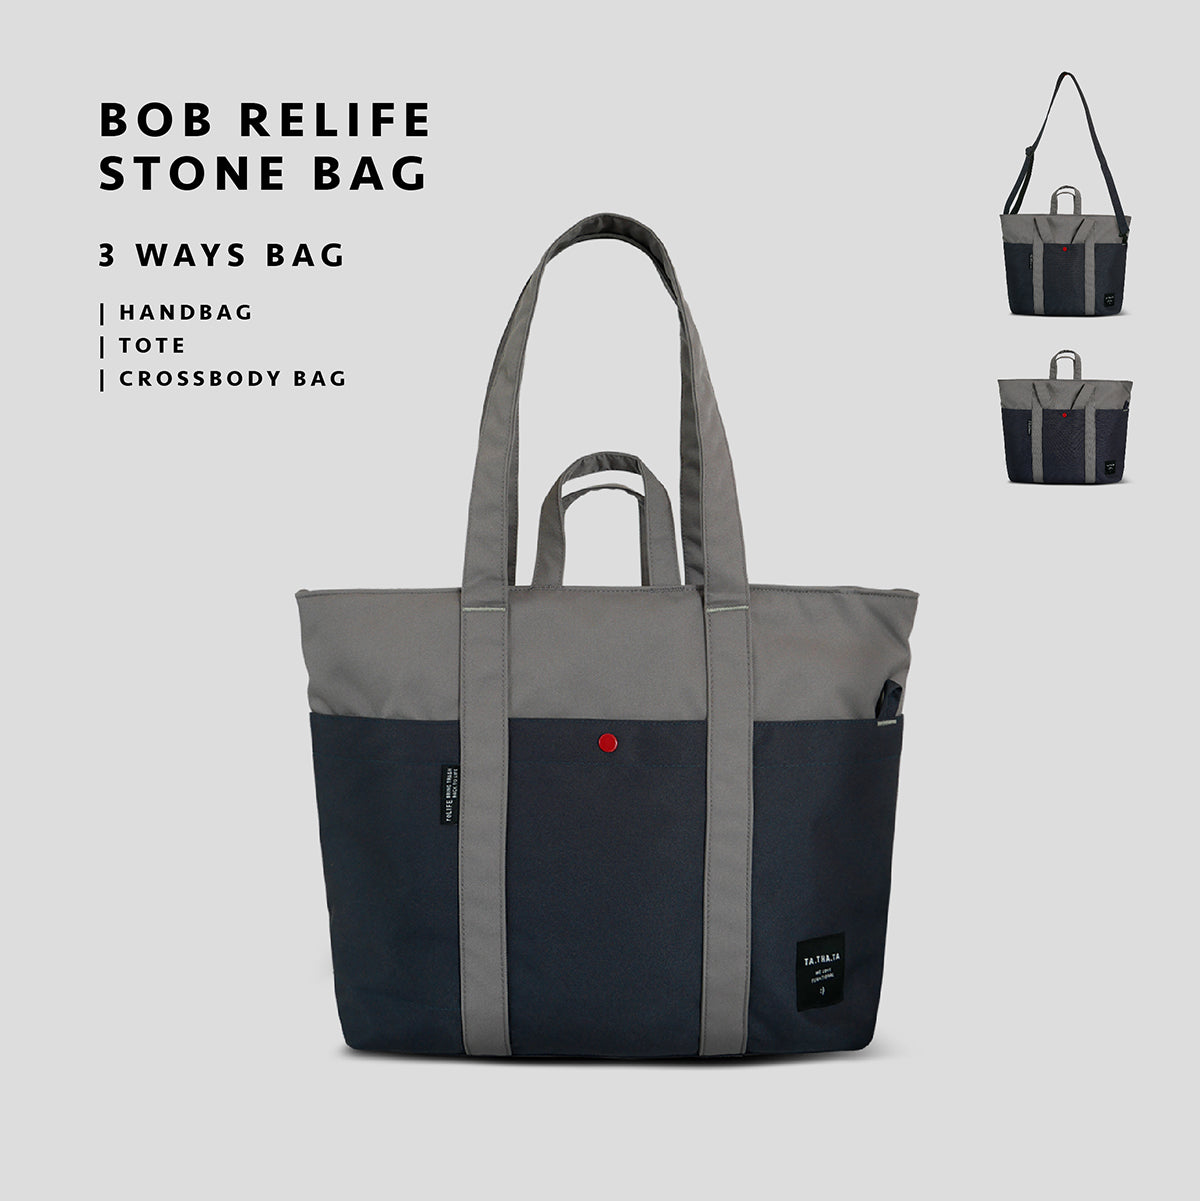 Bob relife stone bag